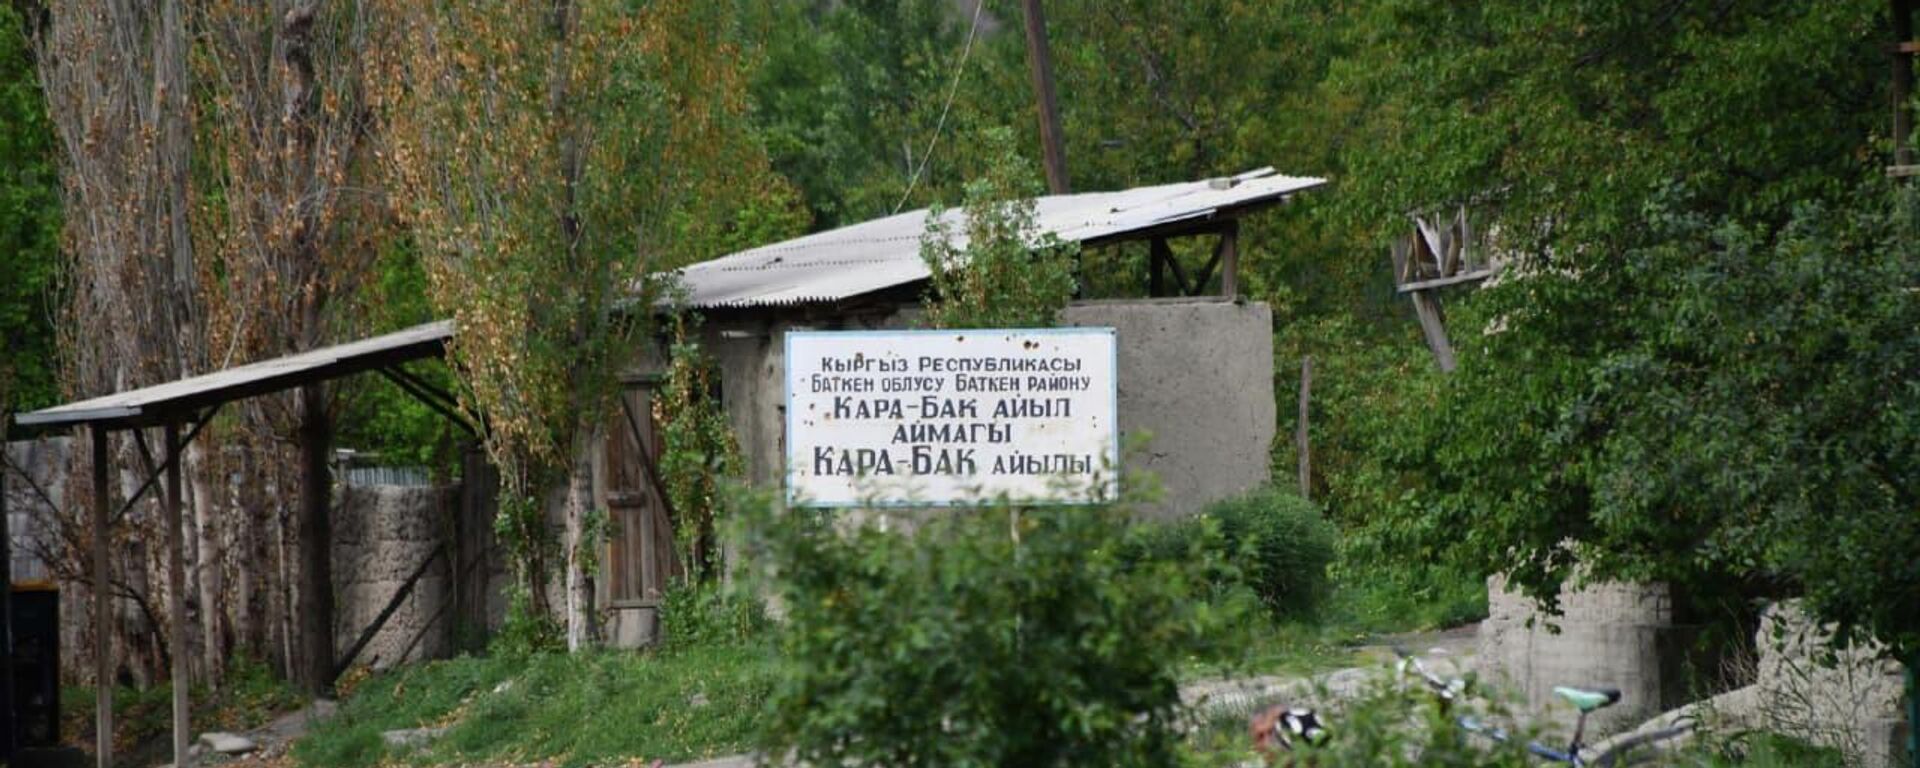 Село Кара-Бак на спорной территории между Кыргызстаном и Таджикистаном - Sputnik Таджикистан, 1920, 23.08.2021